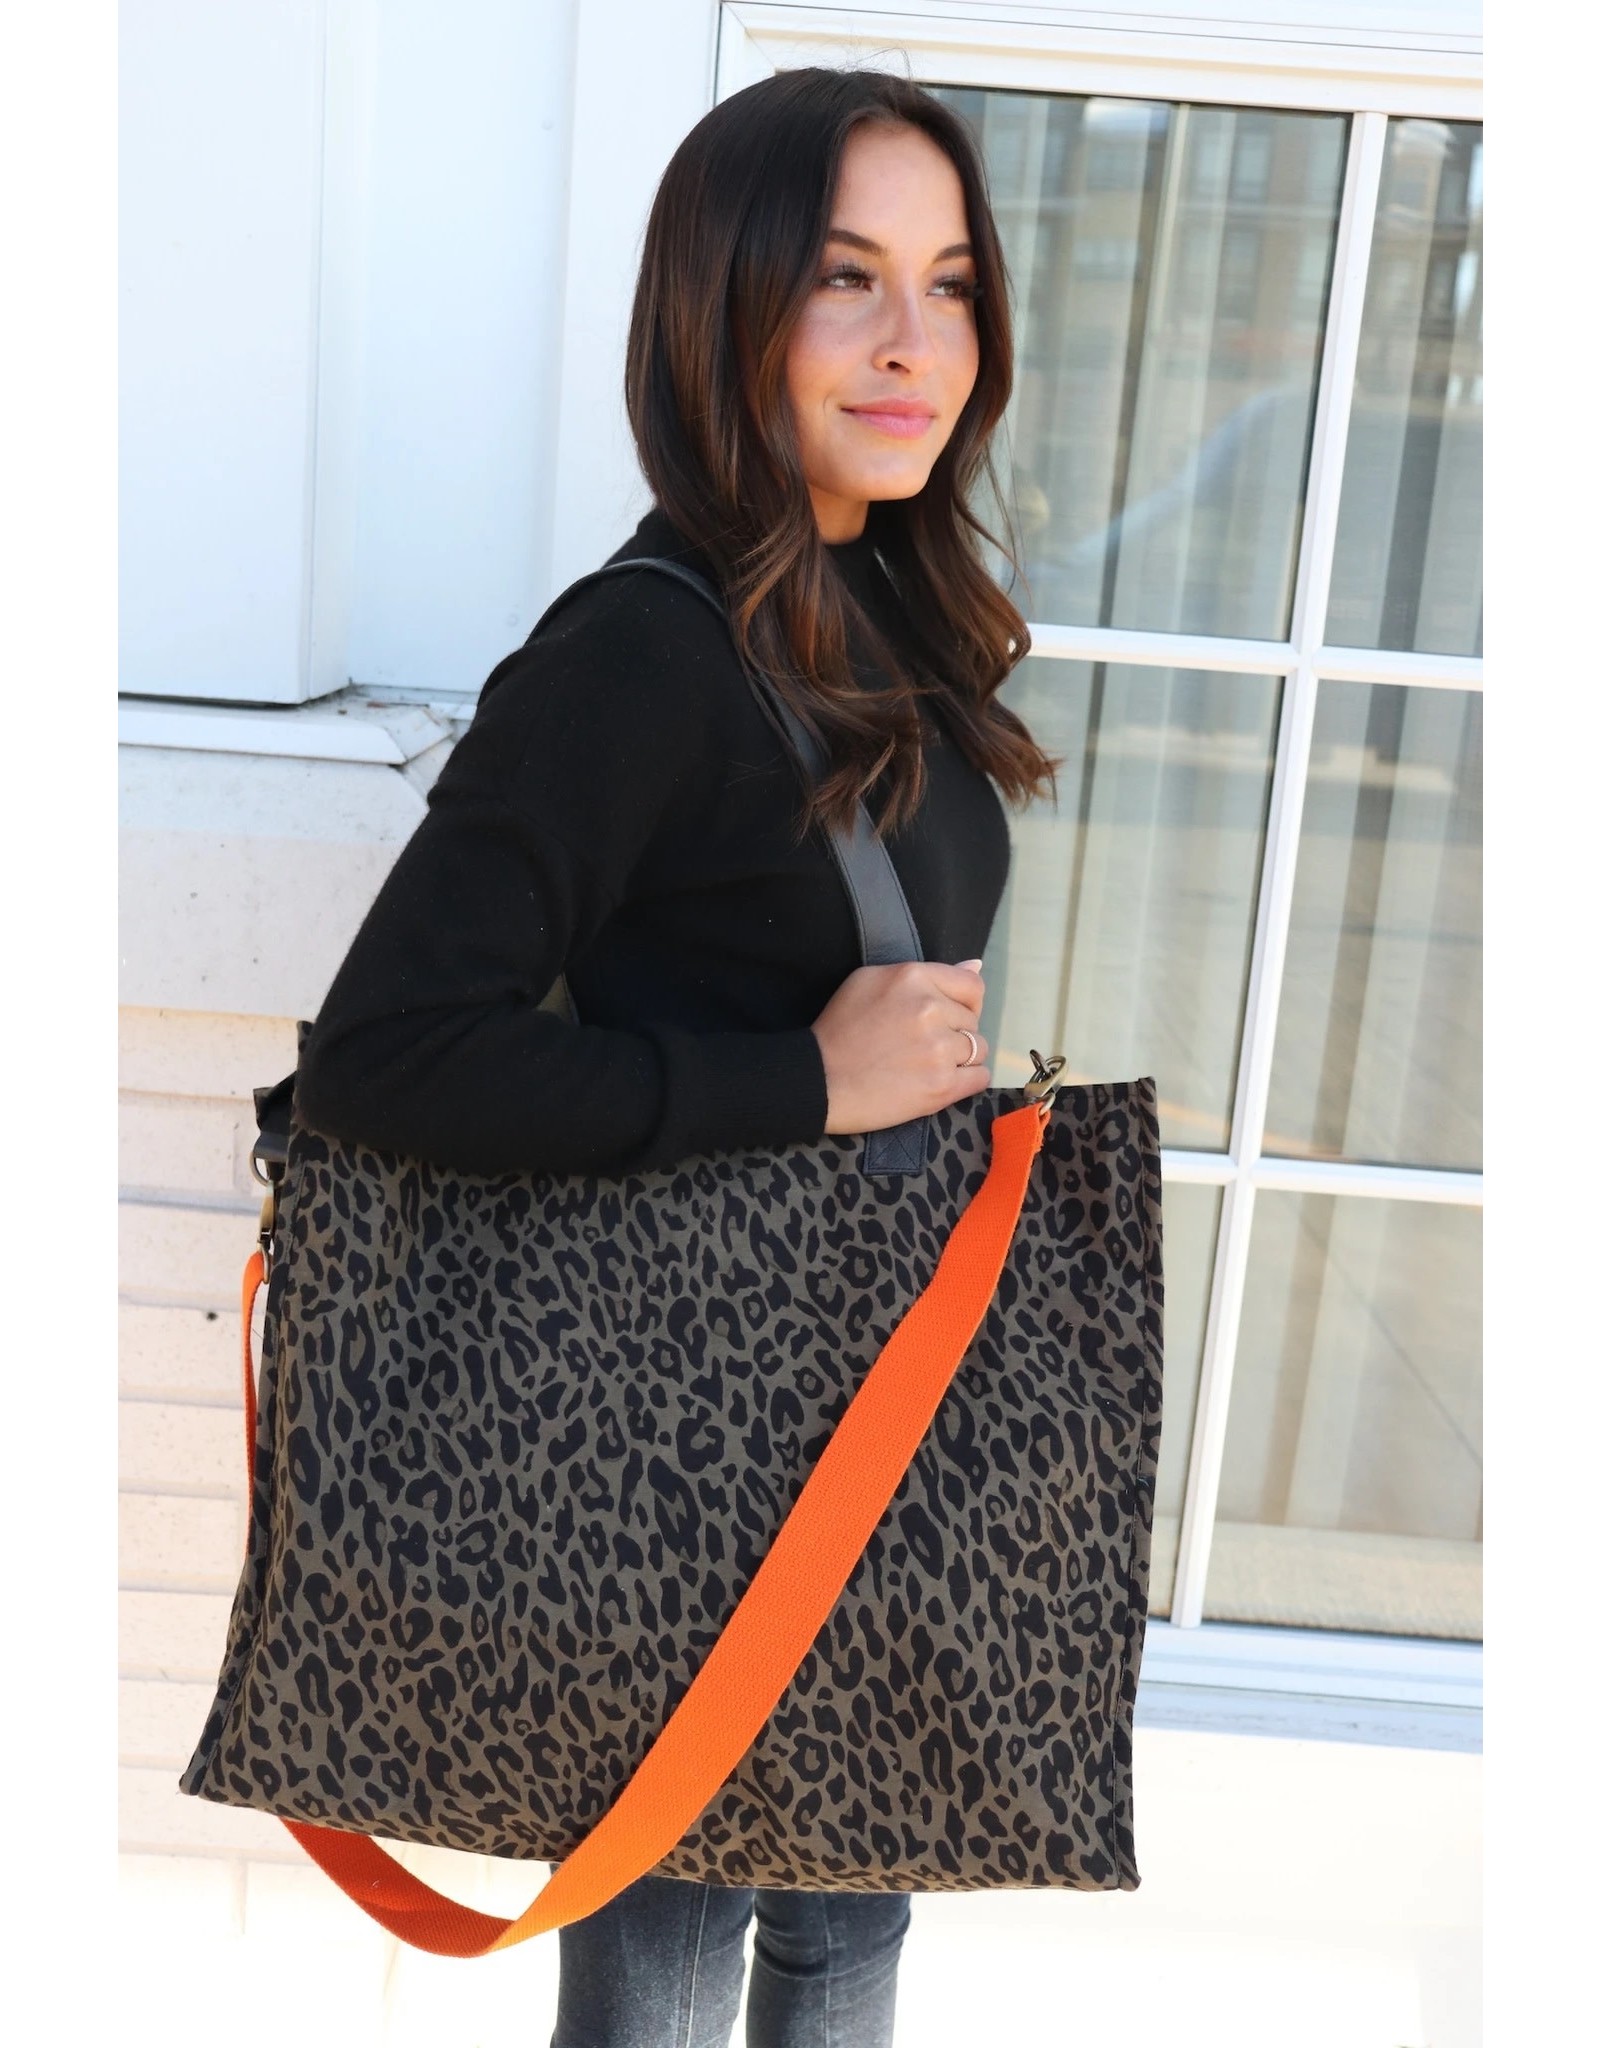 Panache Accessories Leopard Bag with Orange Strap